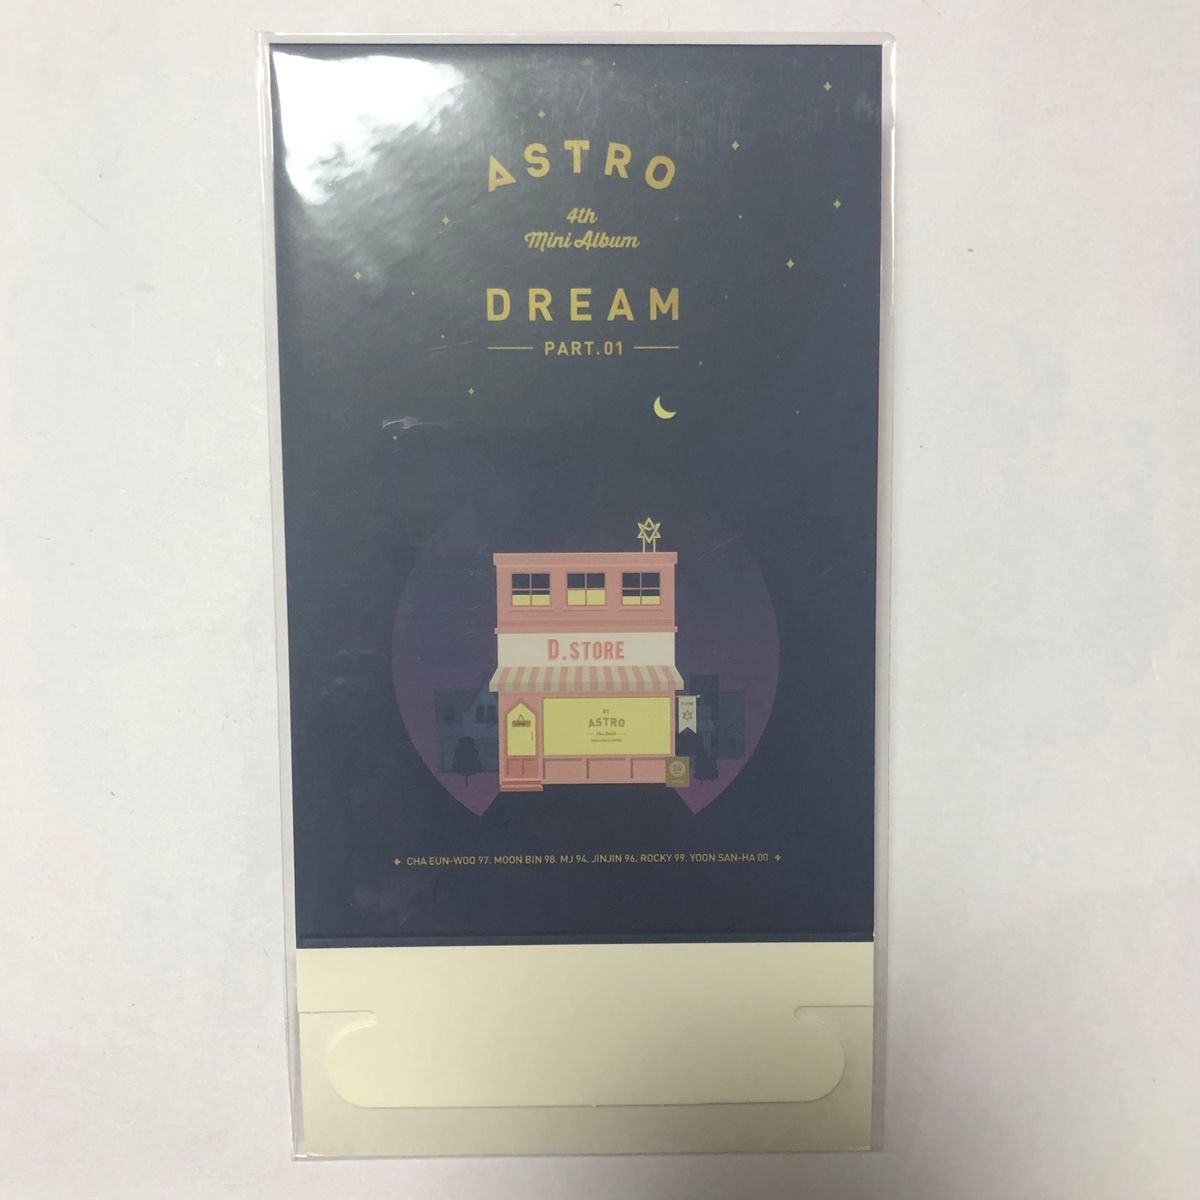 ASTRO アストロ DREAM PART.01 ラキ ROCKY ペーパースタンド paper stand 4th album